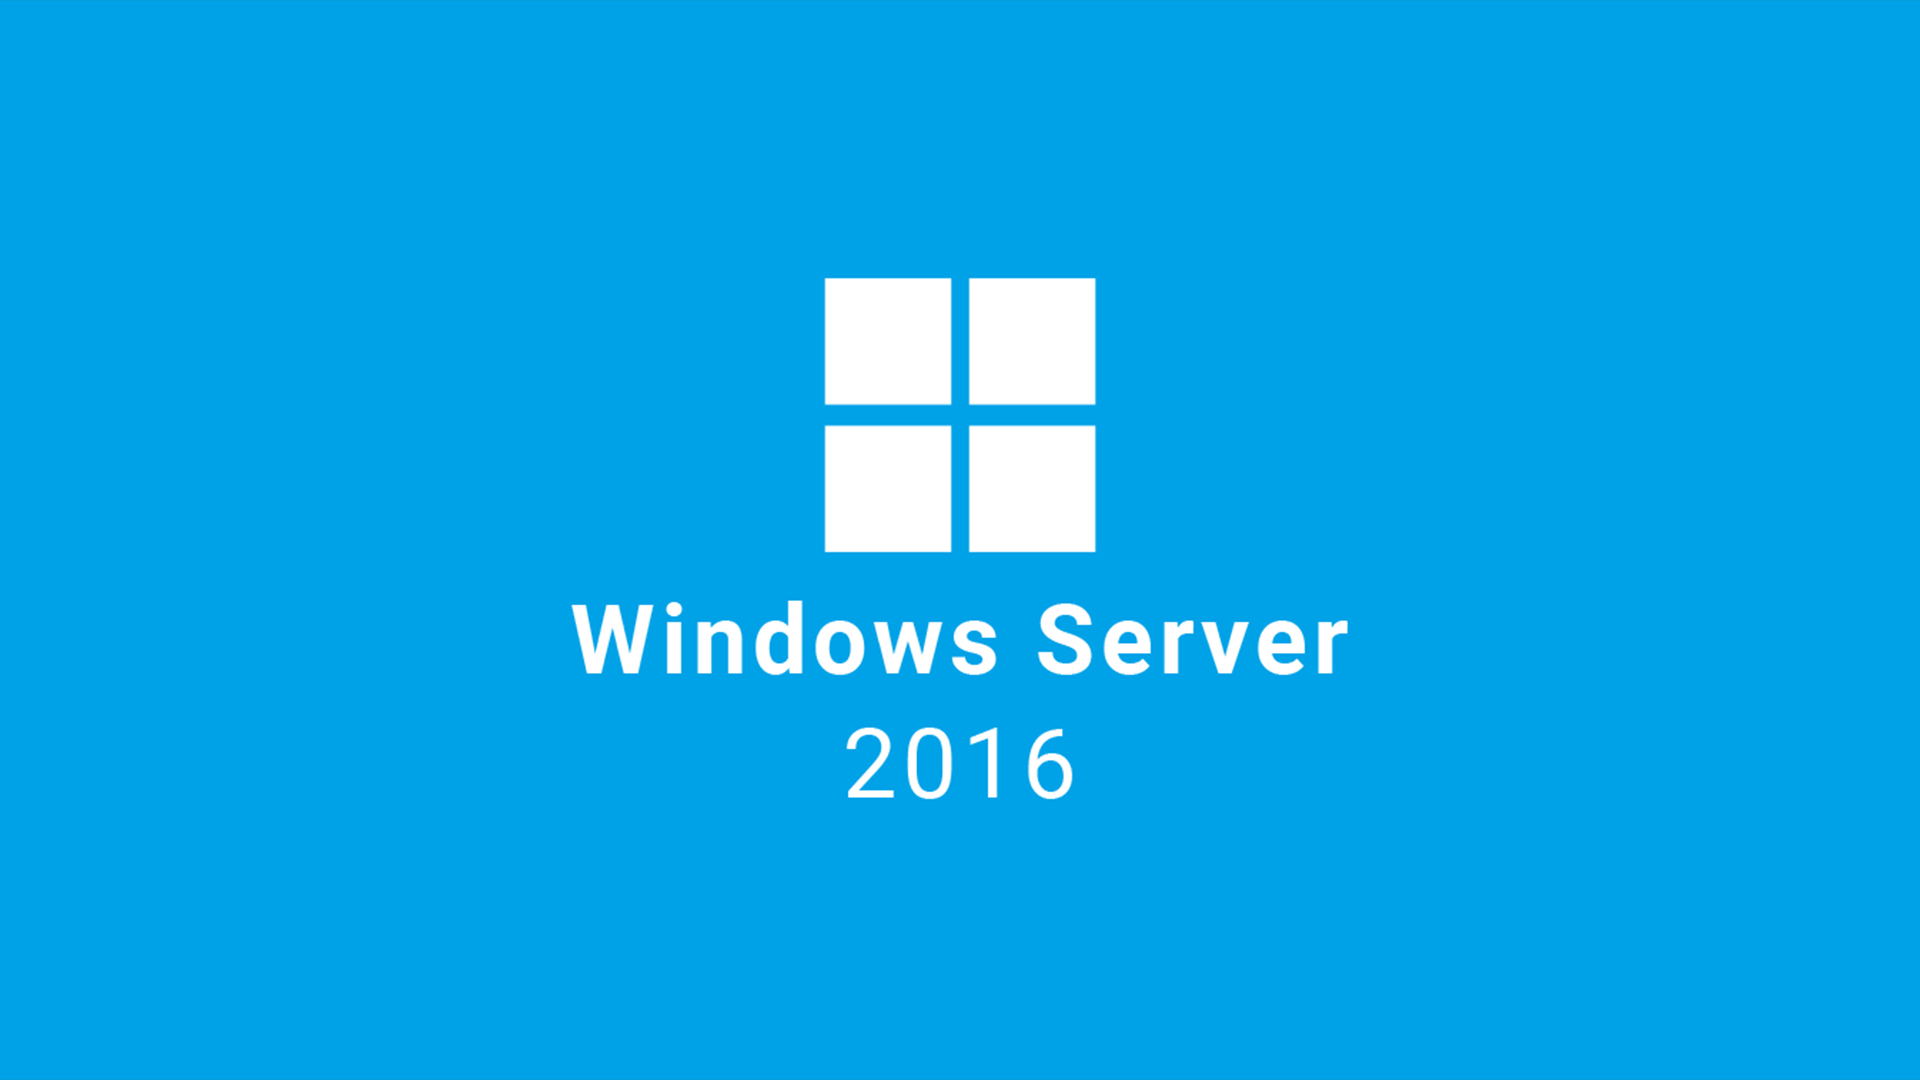 Windows Server 2016 CD Key